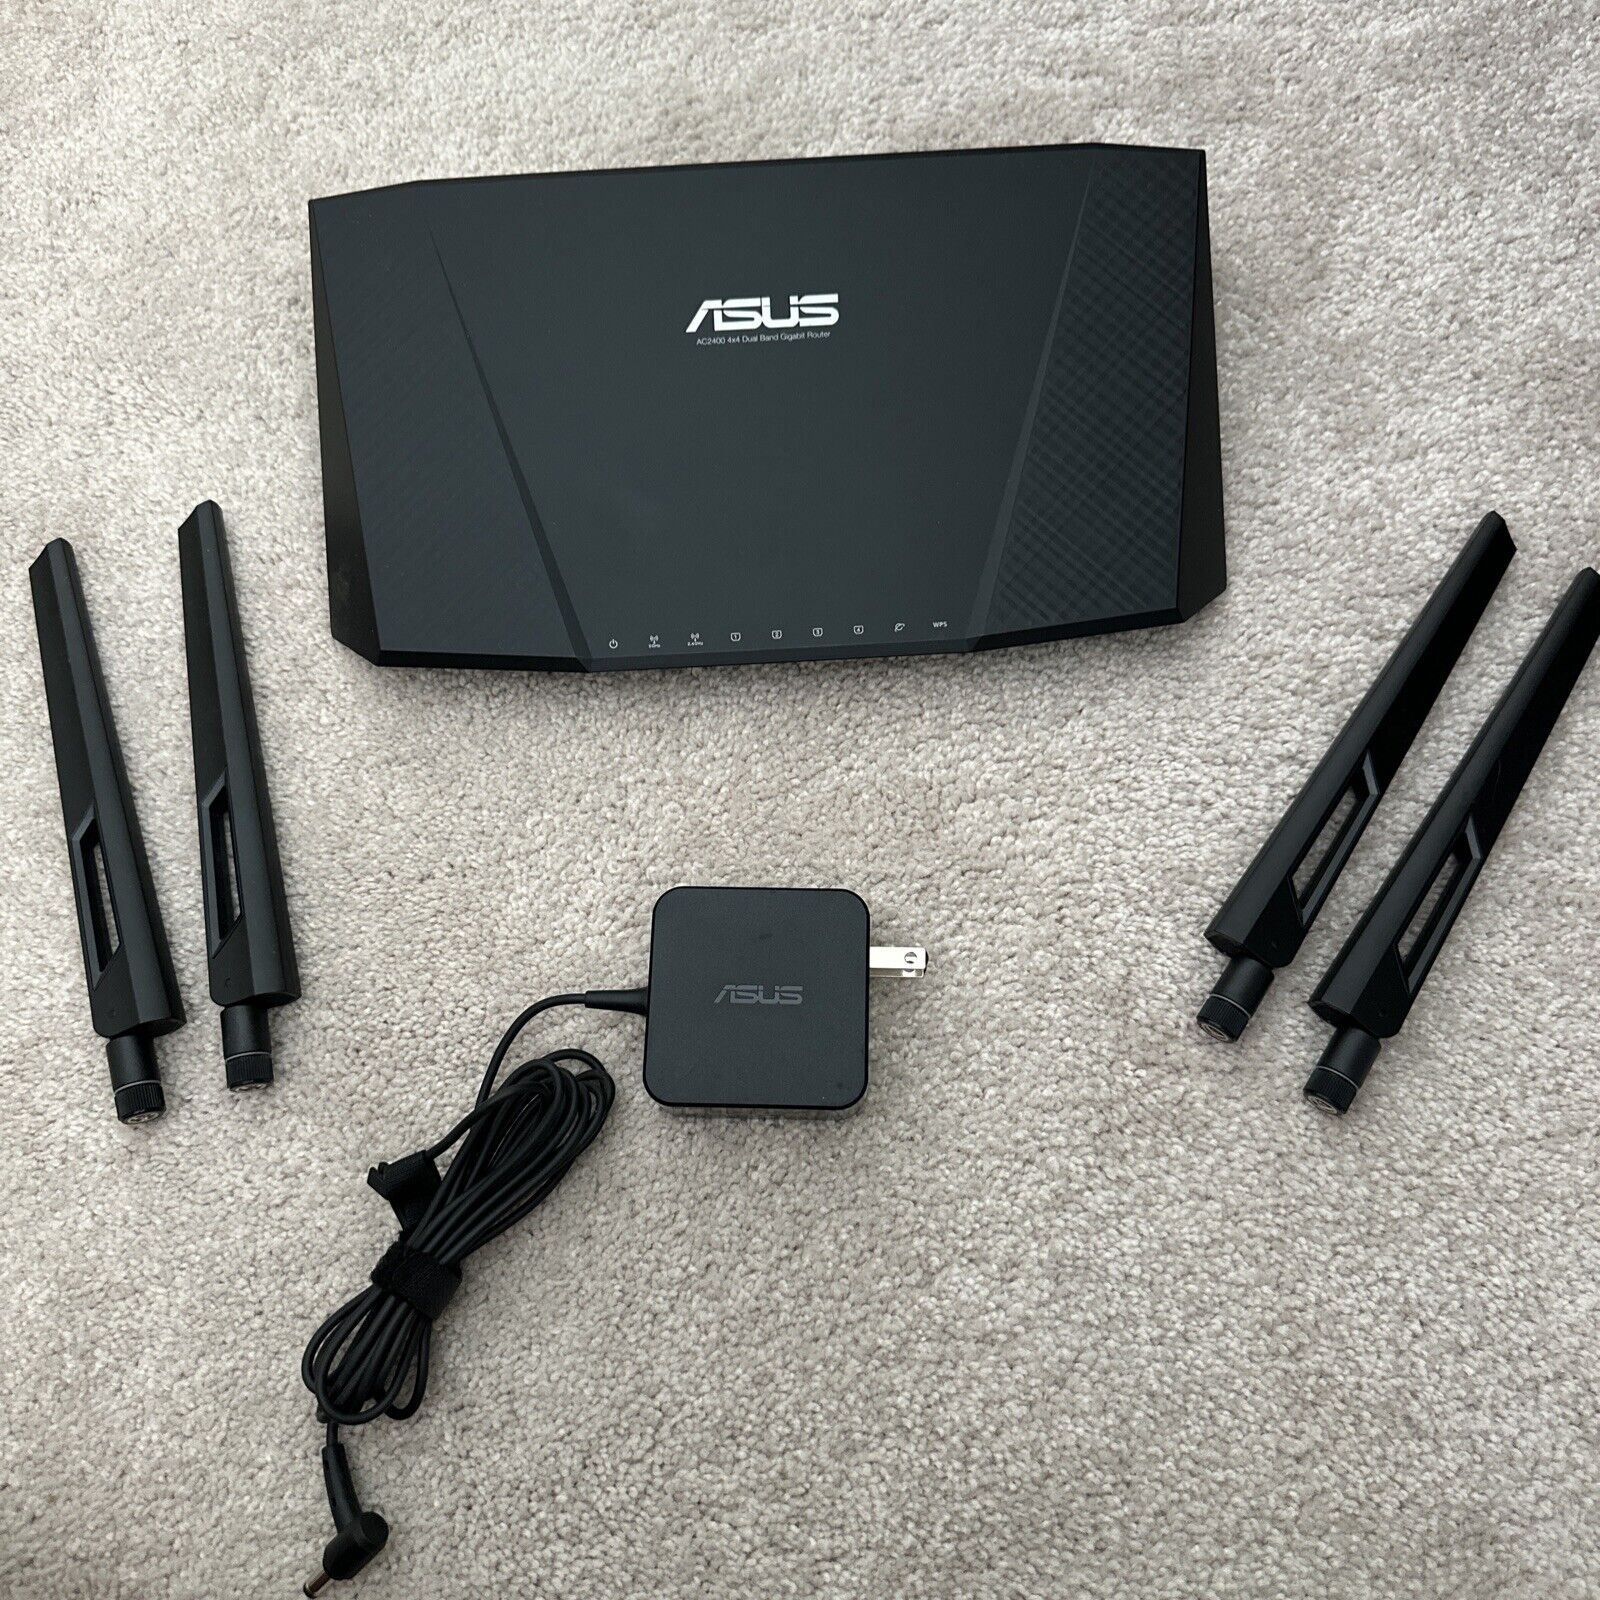 ASUS AC2400 4 X 4 Dual Band Gigabit Router